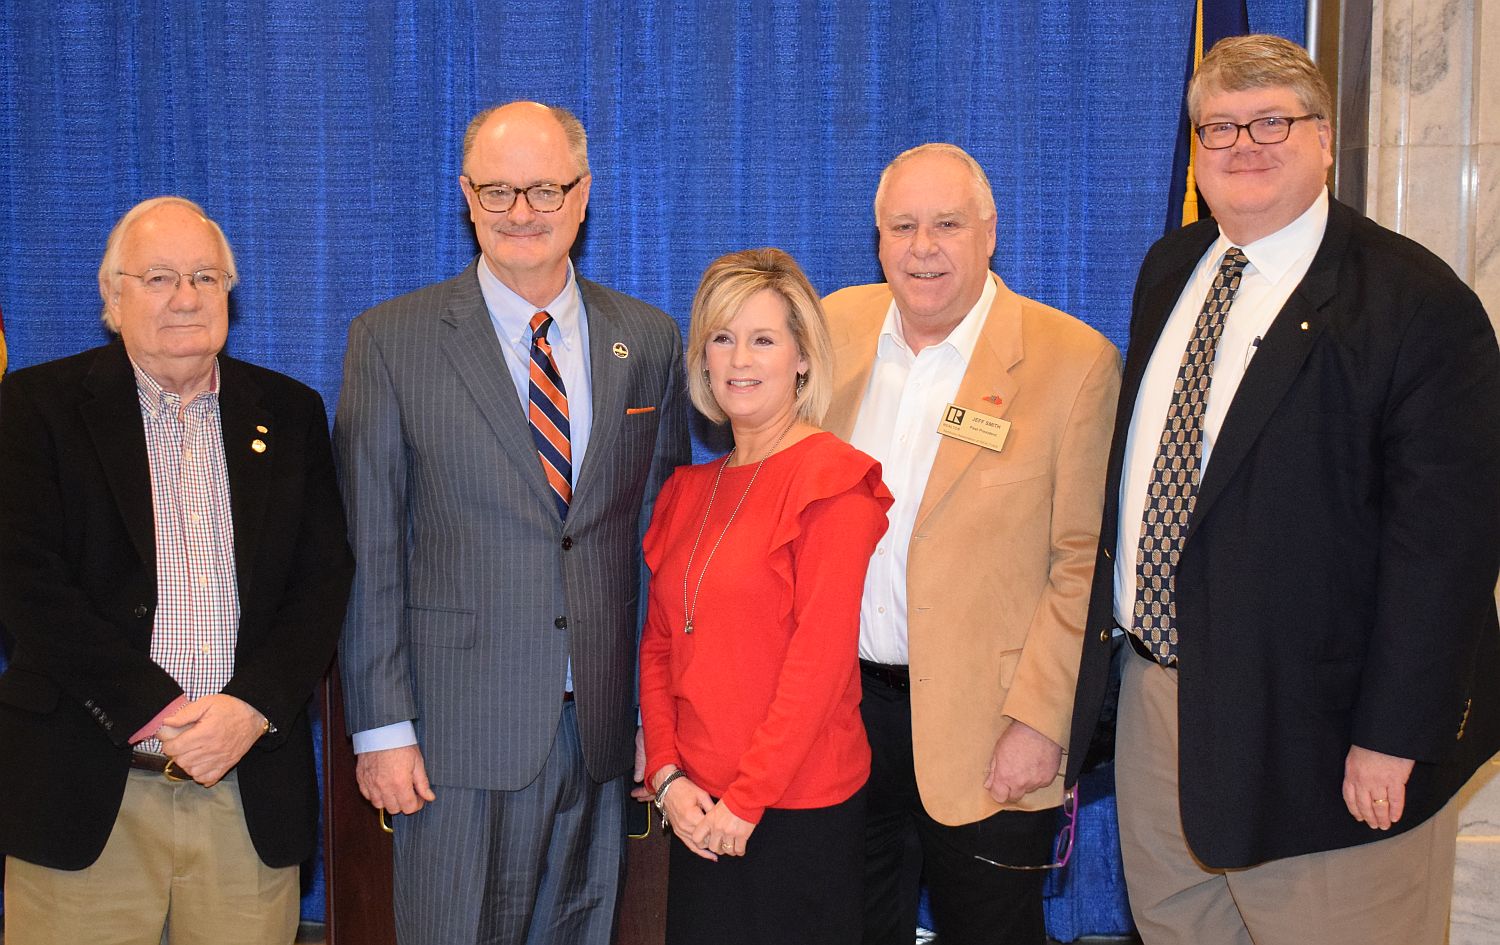 Kentucky REALTORS® recognize John Schickel with its highest legislative award